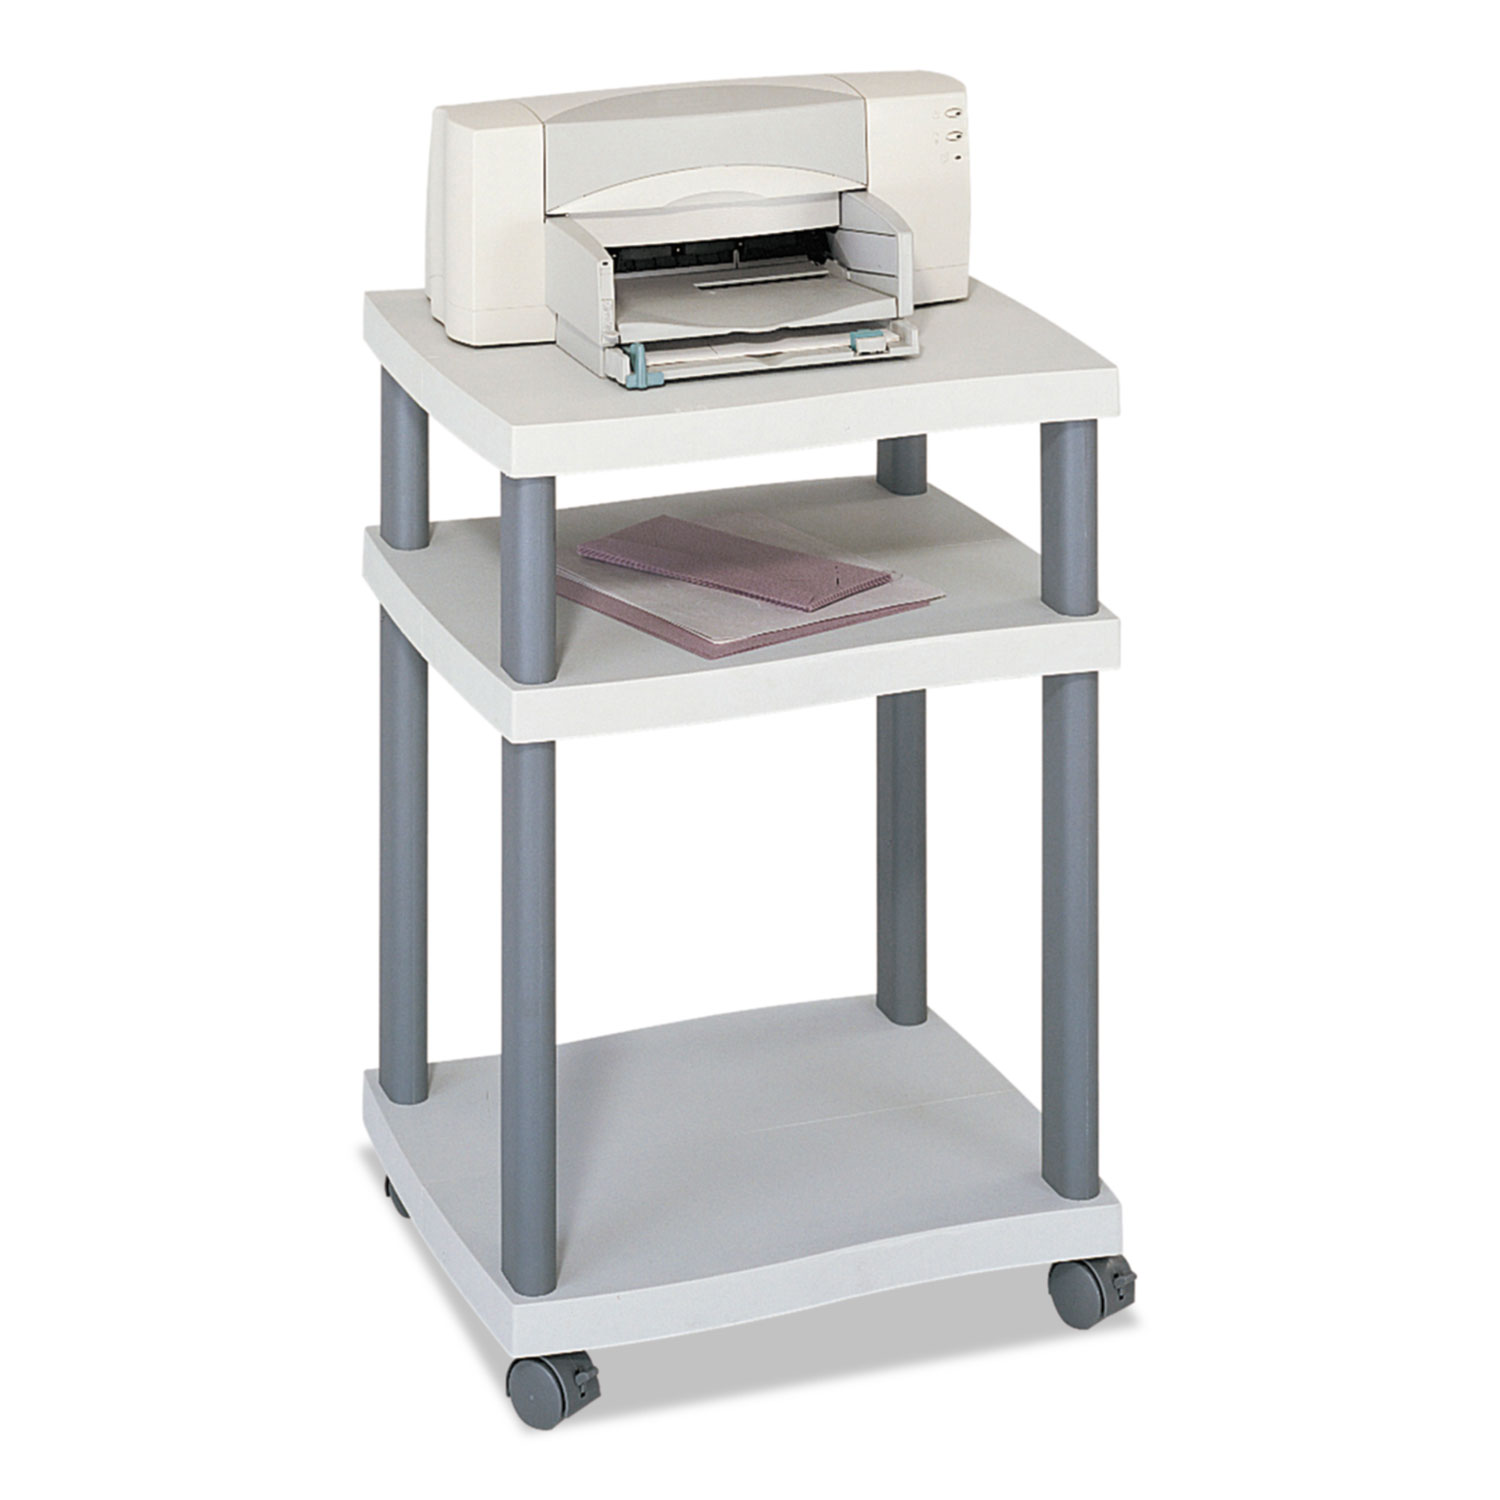  Safco 1860GR Wave Design Printer Stand, Three-Shelf, 20w x 17.5d x 29.25h, Charcoal Gray (SAF1860GR) 